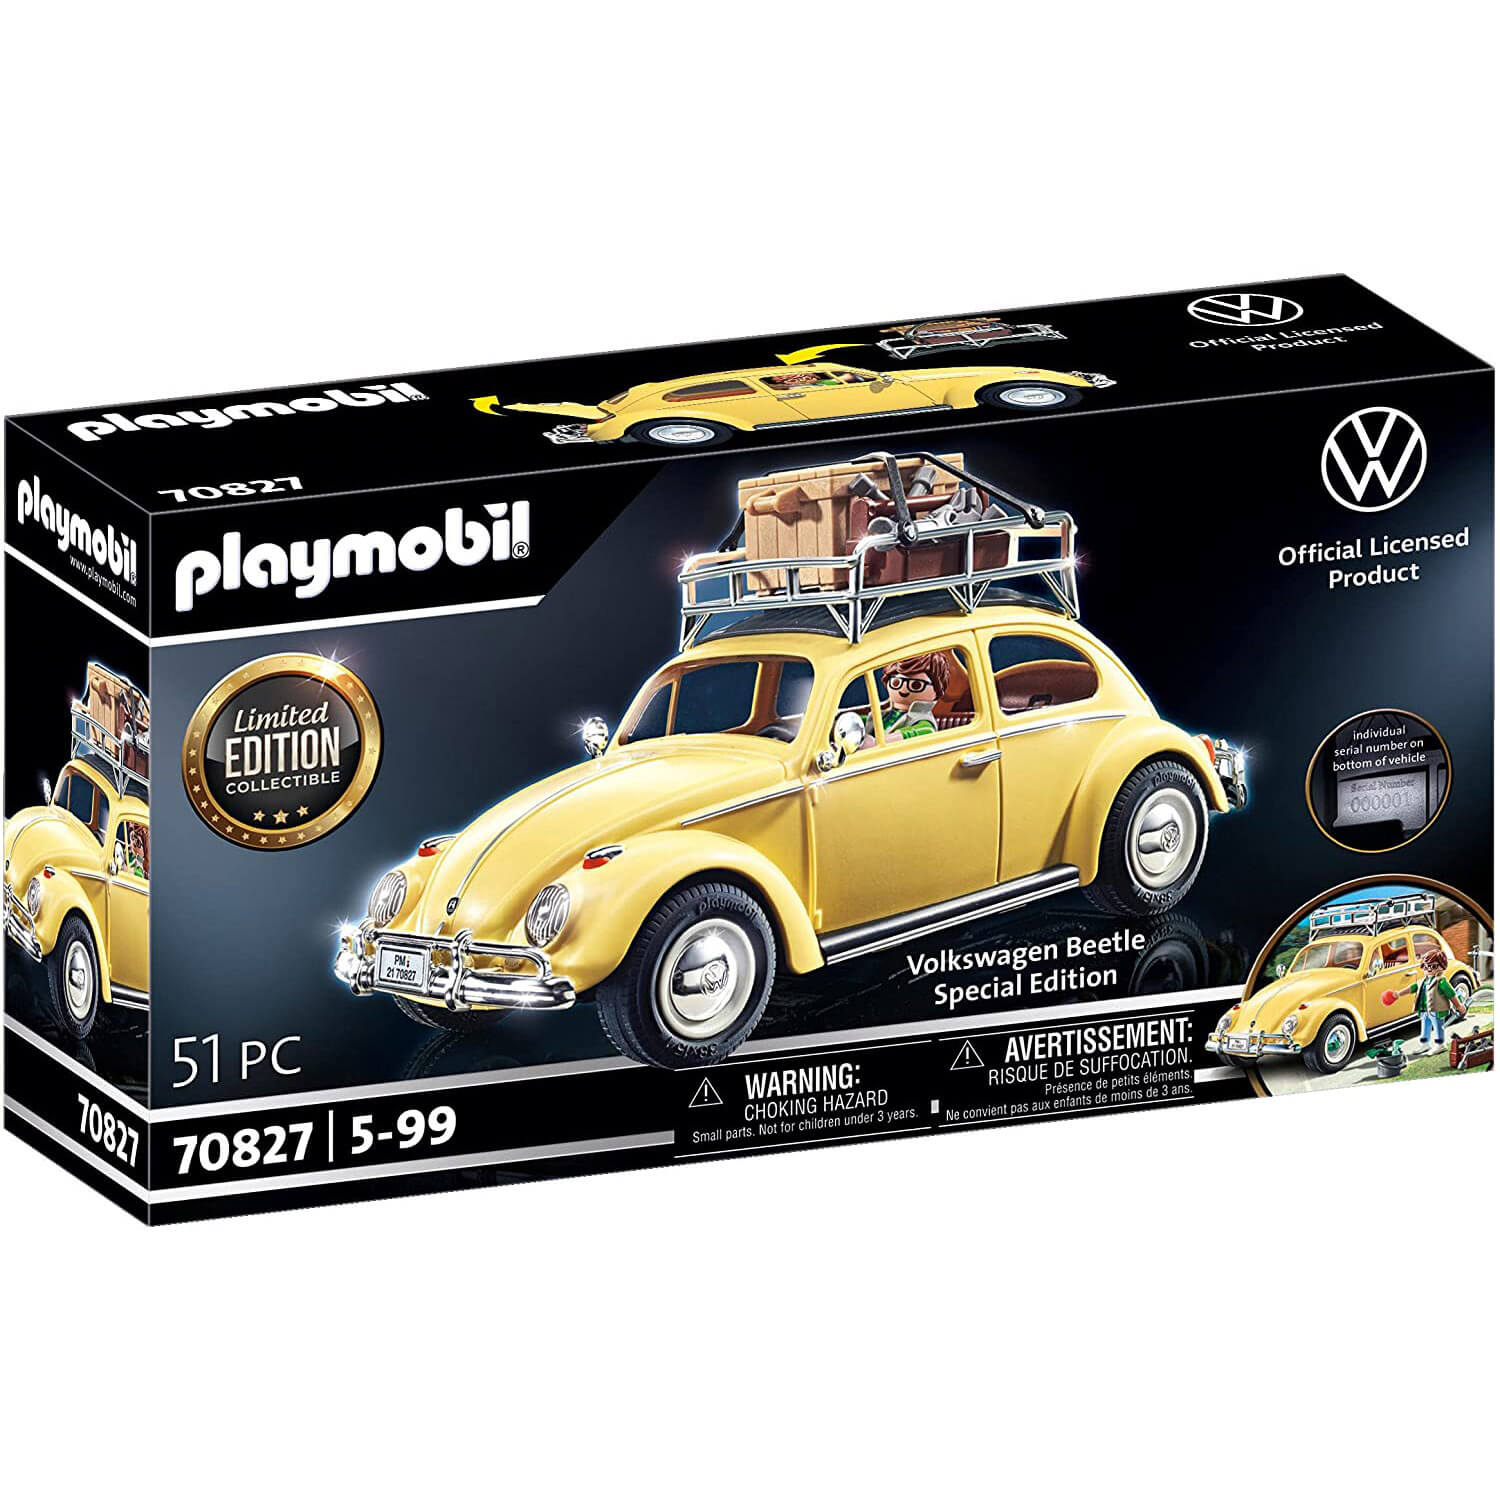 Playmobil VW Volkswagen Beetle Special Edition (70827)